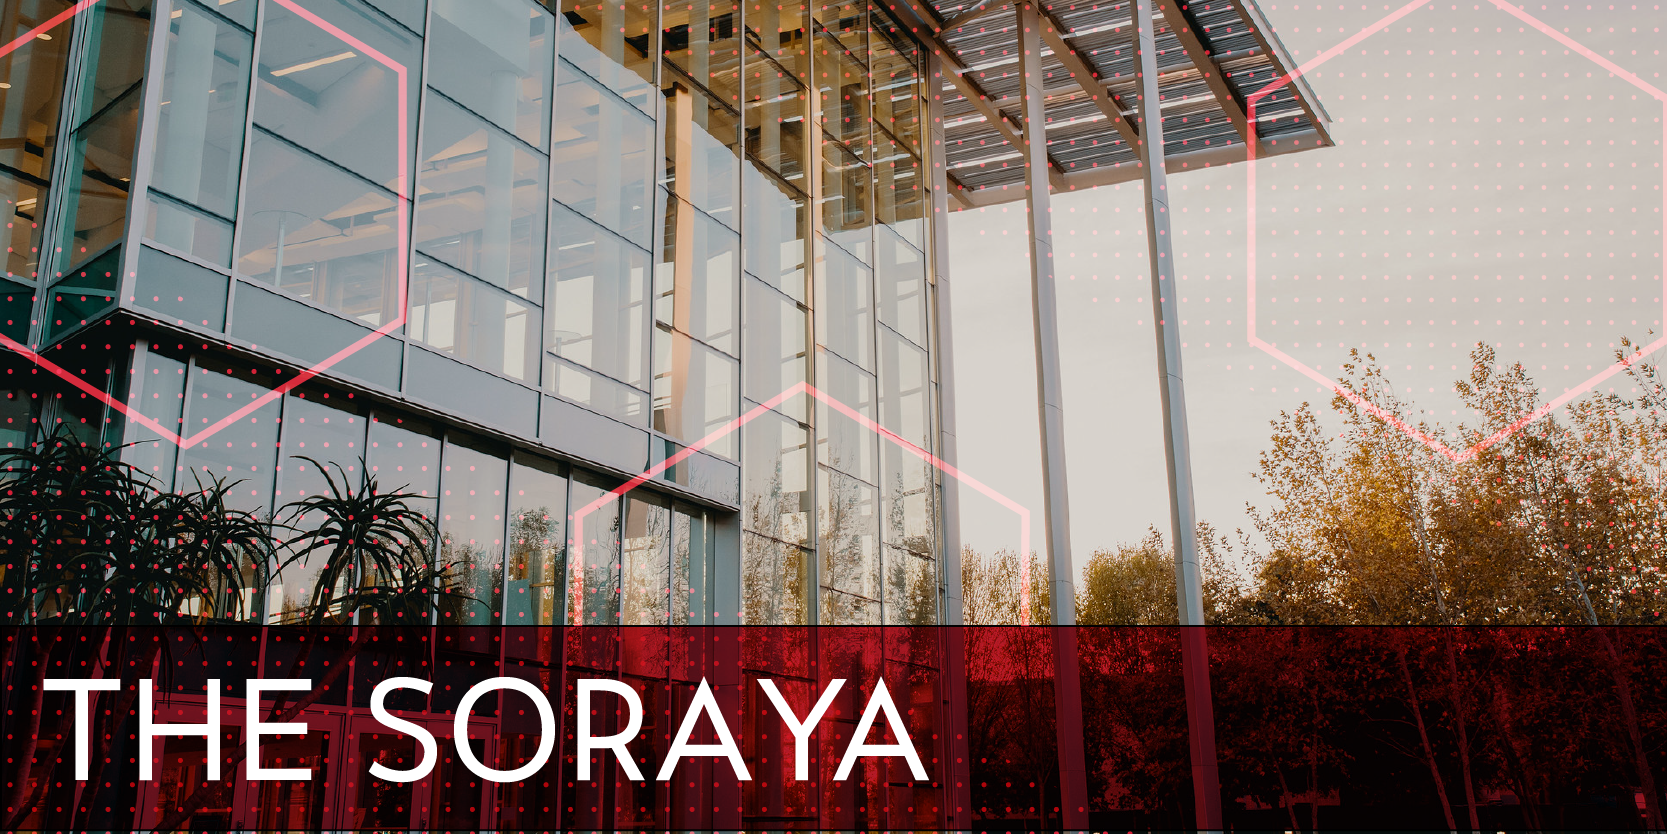 The Soraya